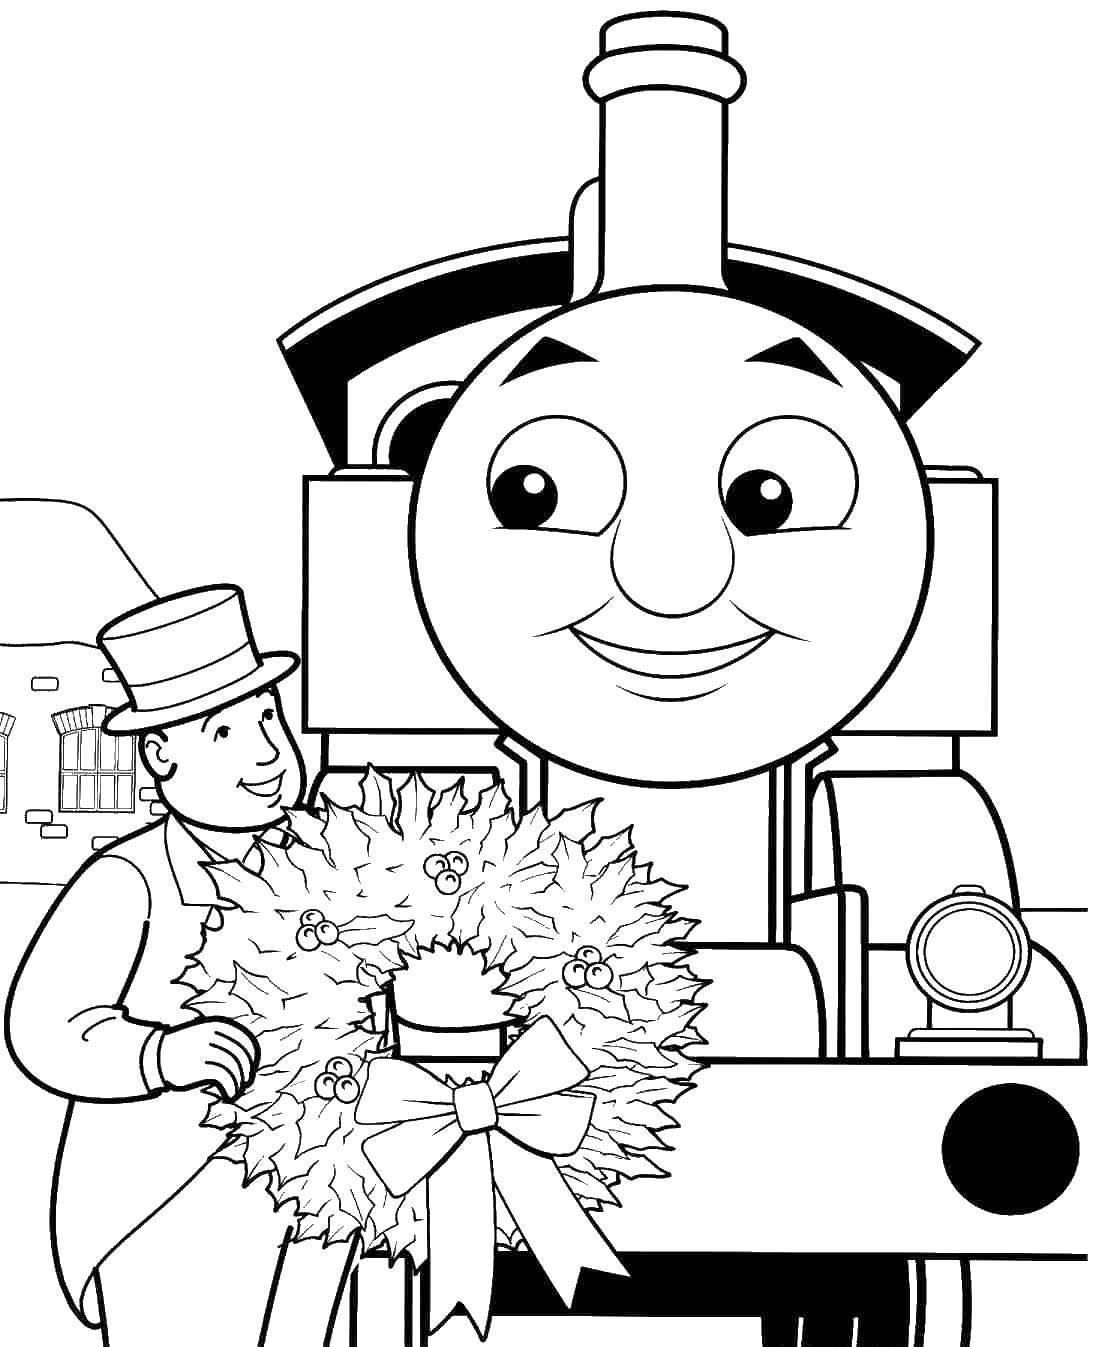 Coloring Thomas the tank engine wins award. Category cartoons. Tags:  locomotive, Thomas.